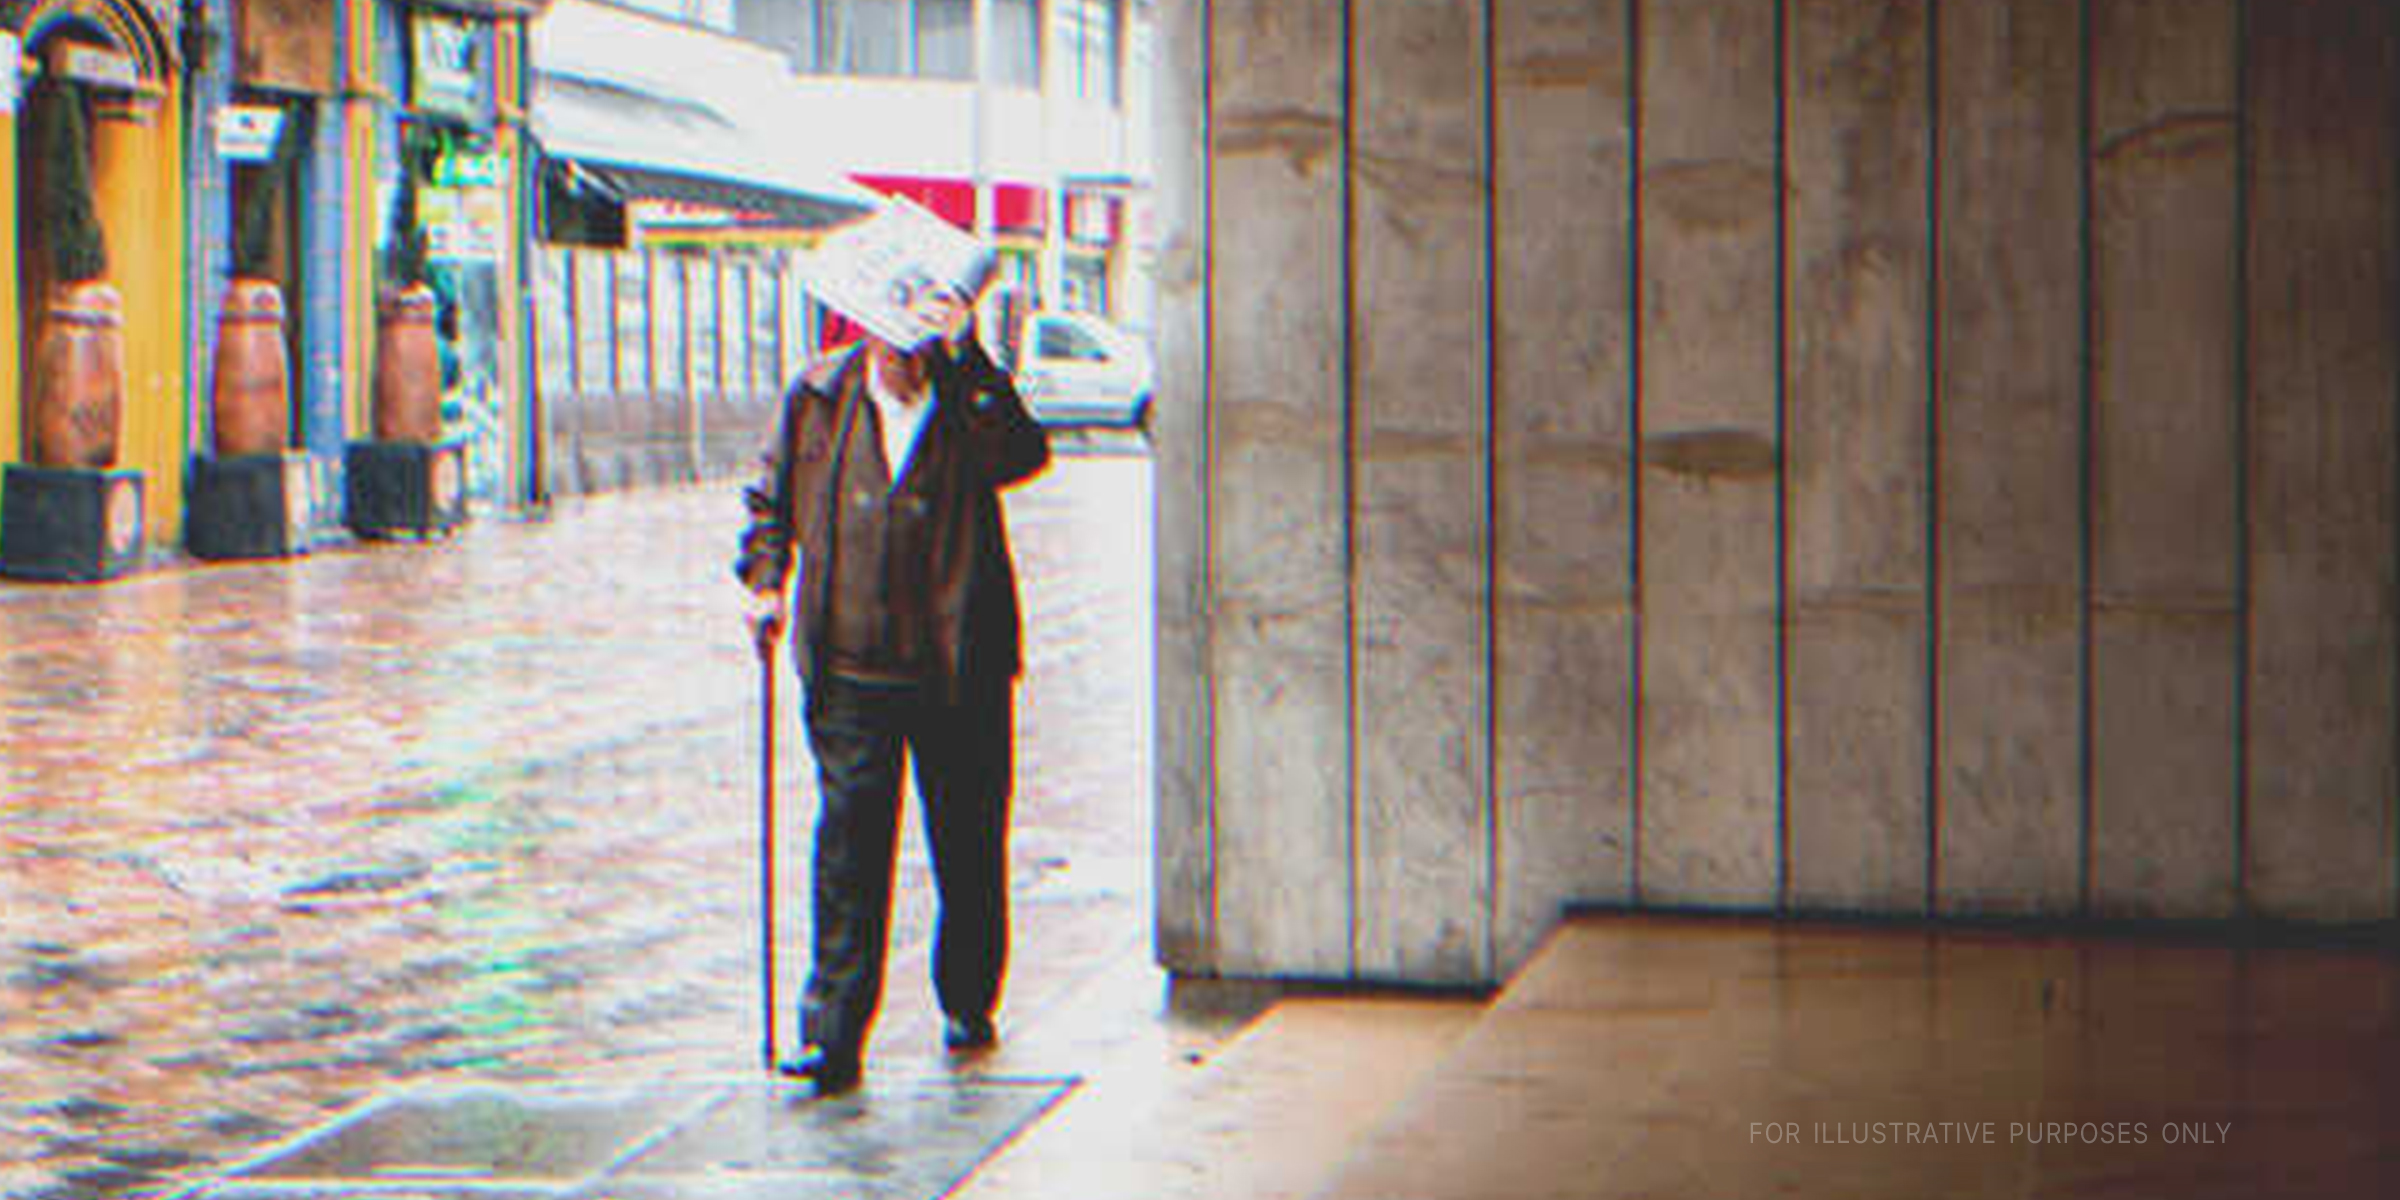 Älterer Mann geht im Regen spazieren | Quelle: Shutterstock